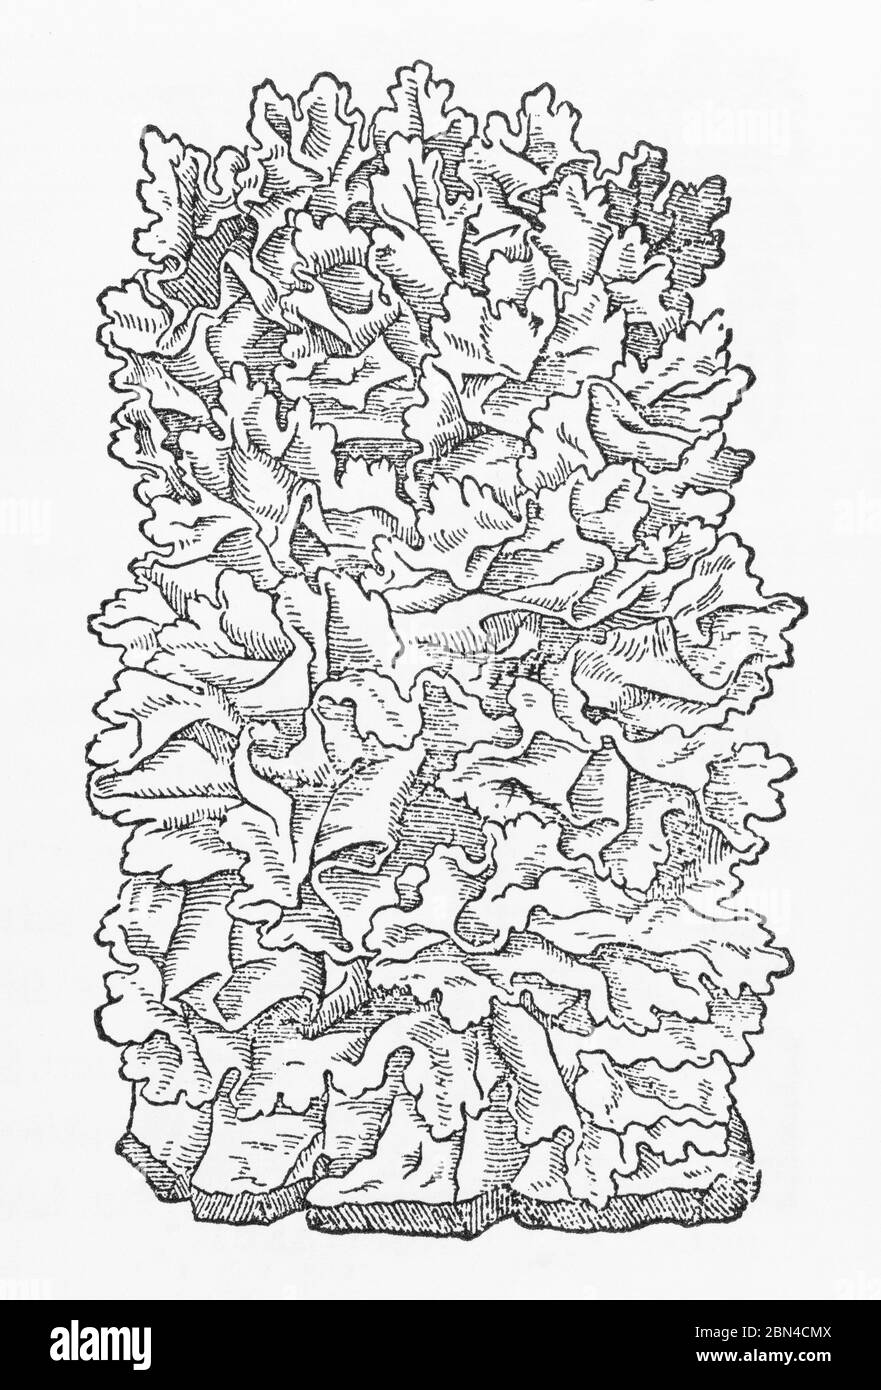 Seesalat / Ulva lactuca Holzschnitt aus Gerarde's Herball, Pflanzengeschichte. Er nennt es Meereslungkraut, Austerngrün (Lichen Marinus). P1377 Stockfoto